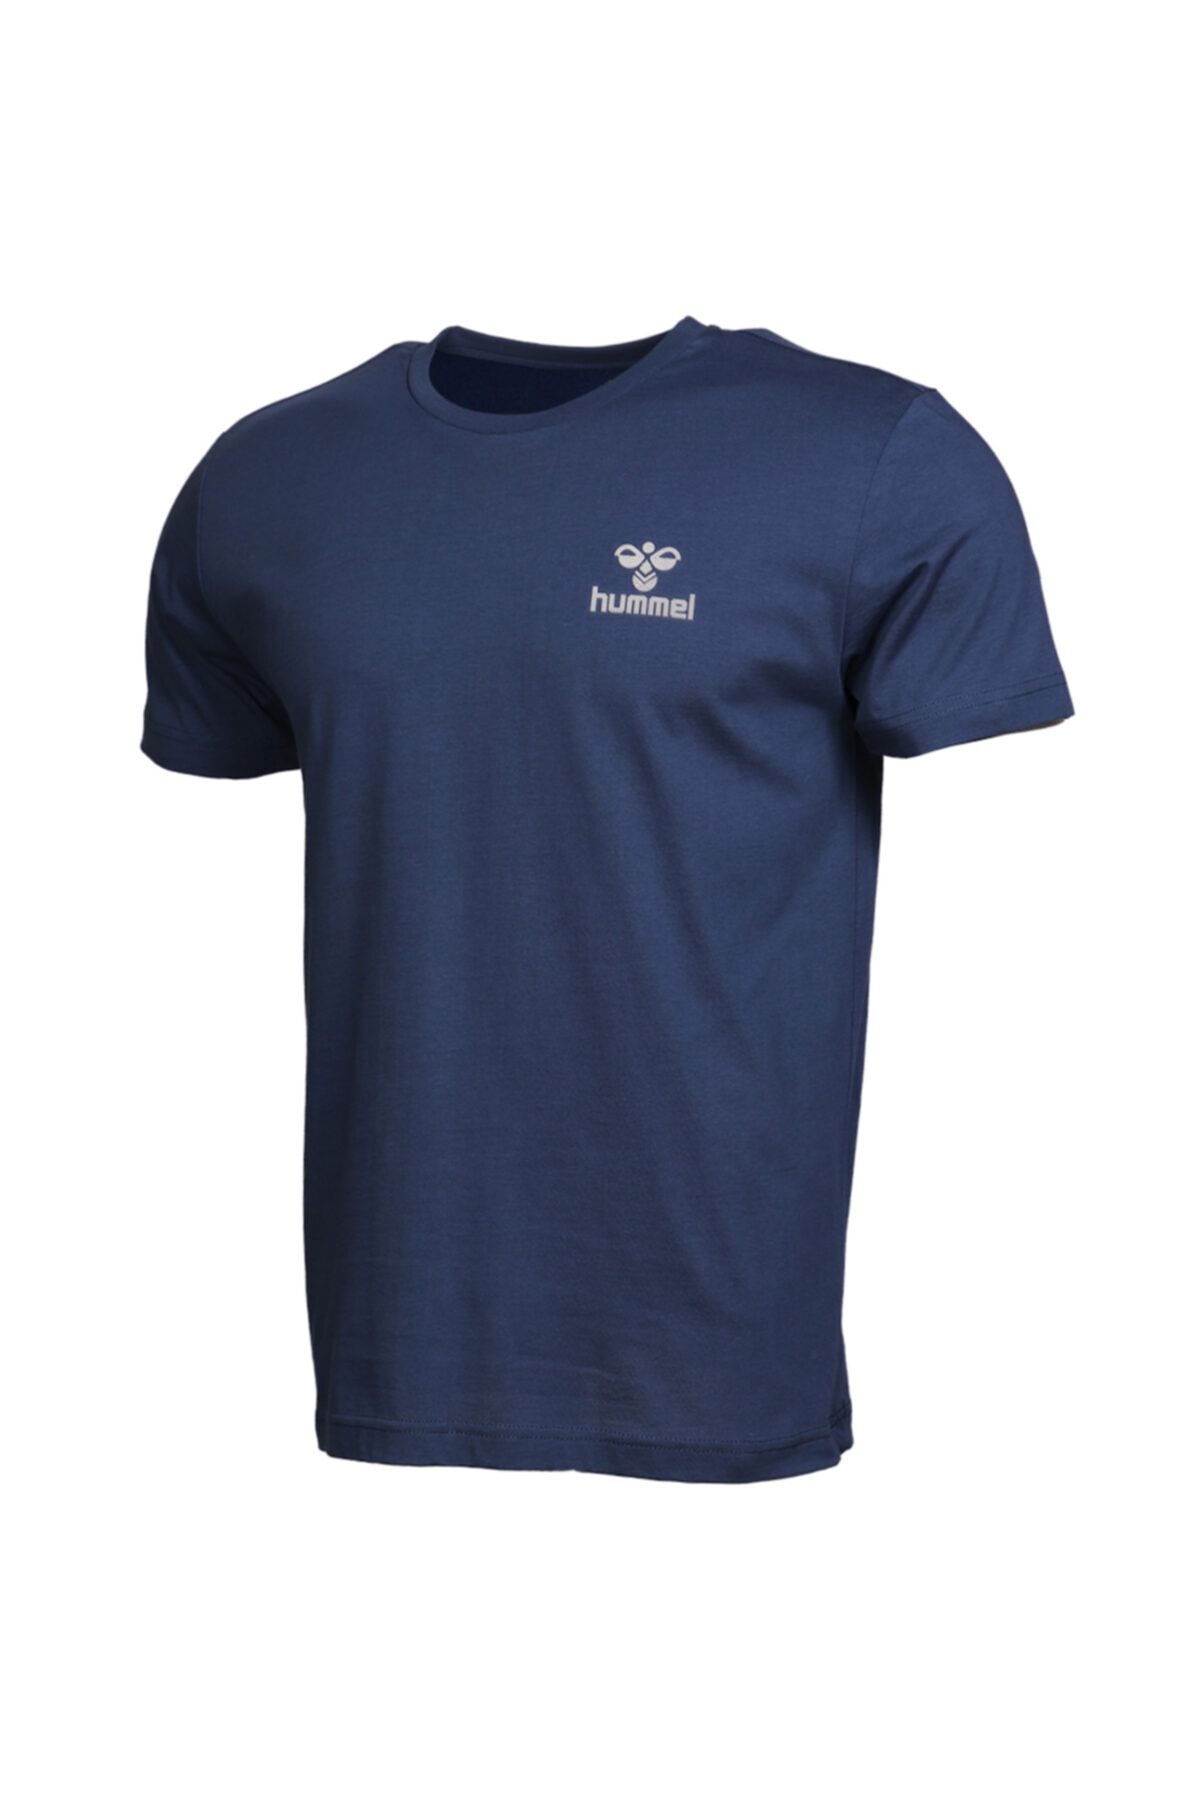 hummel Keaton - Erkek Mavi T-Shirt